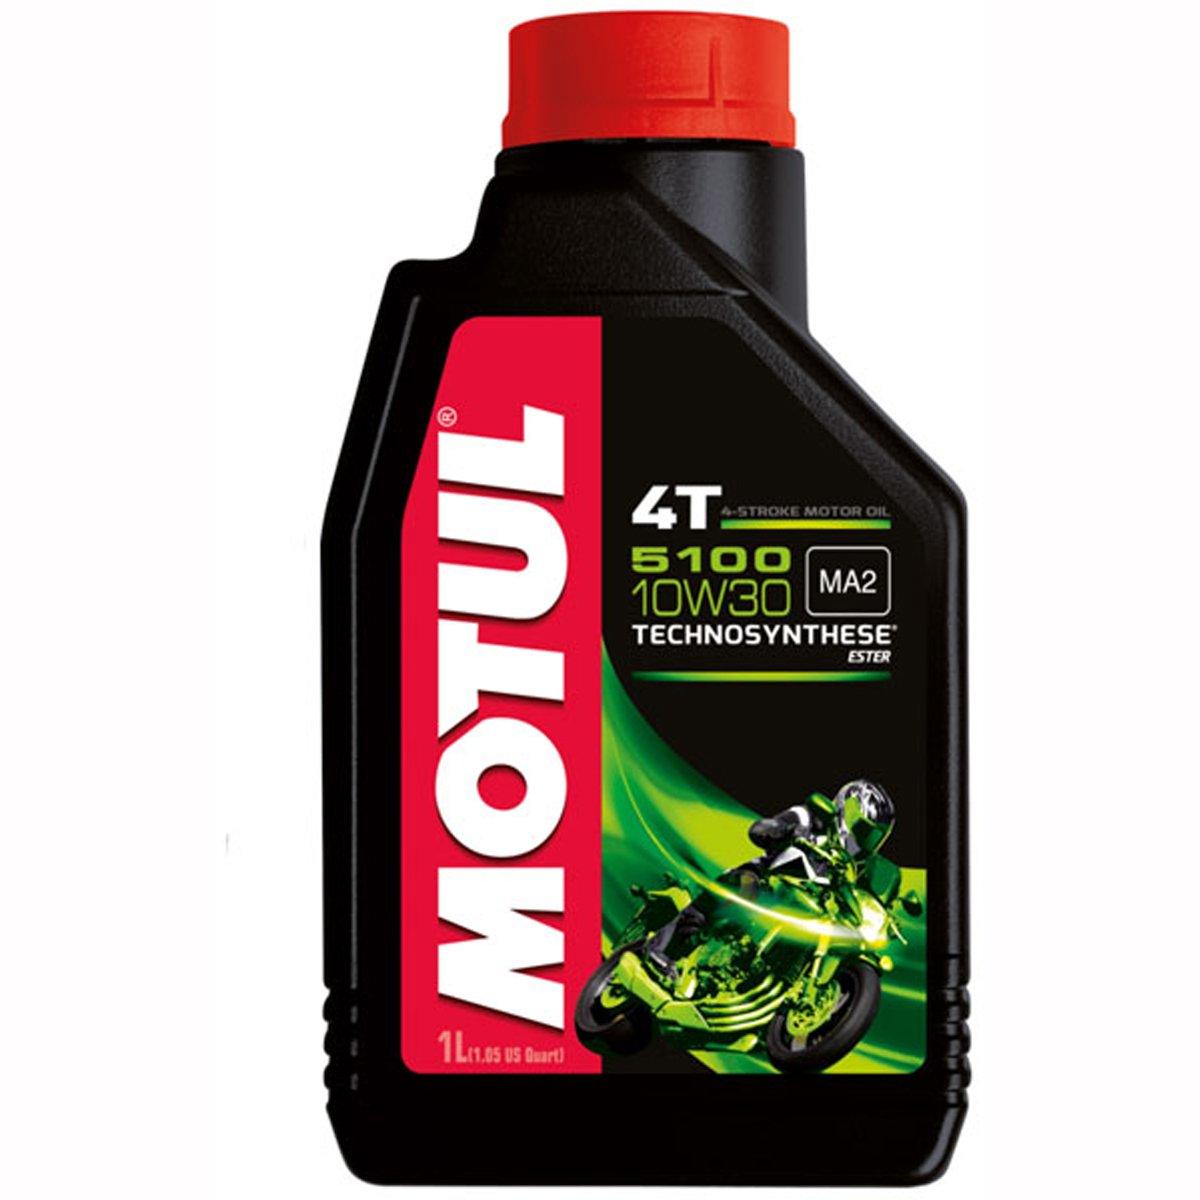 Motul Semi-Synthetic 5100 10W30 4T Oil - Black - Browse our range of Care: Oils & Liquids - getgearedshop 